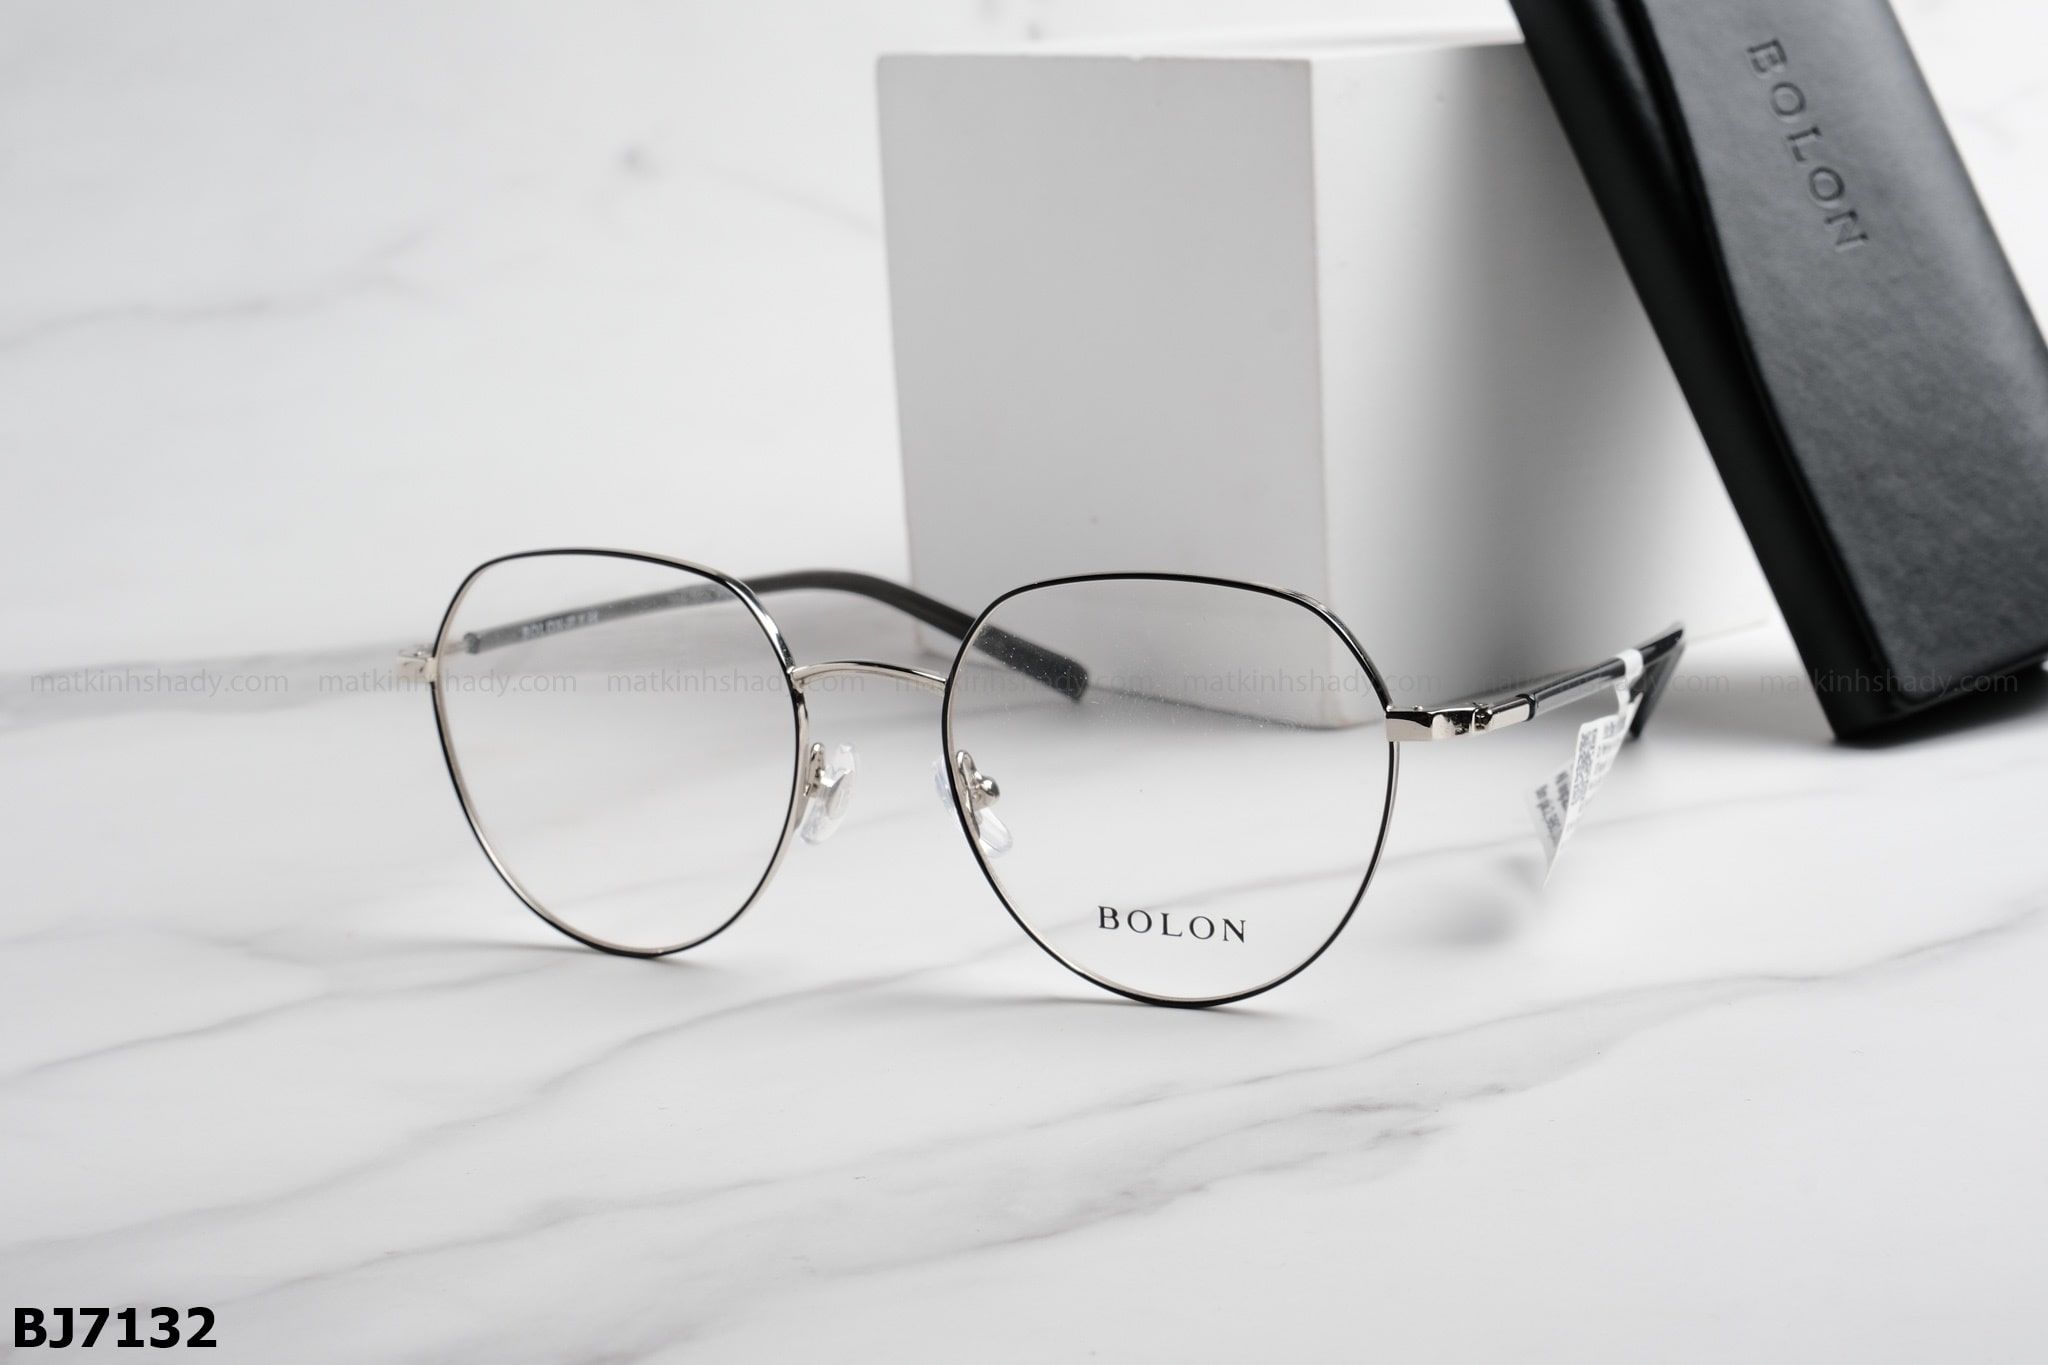  Bolon Eyewear - Glasses - BJ7132 